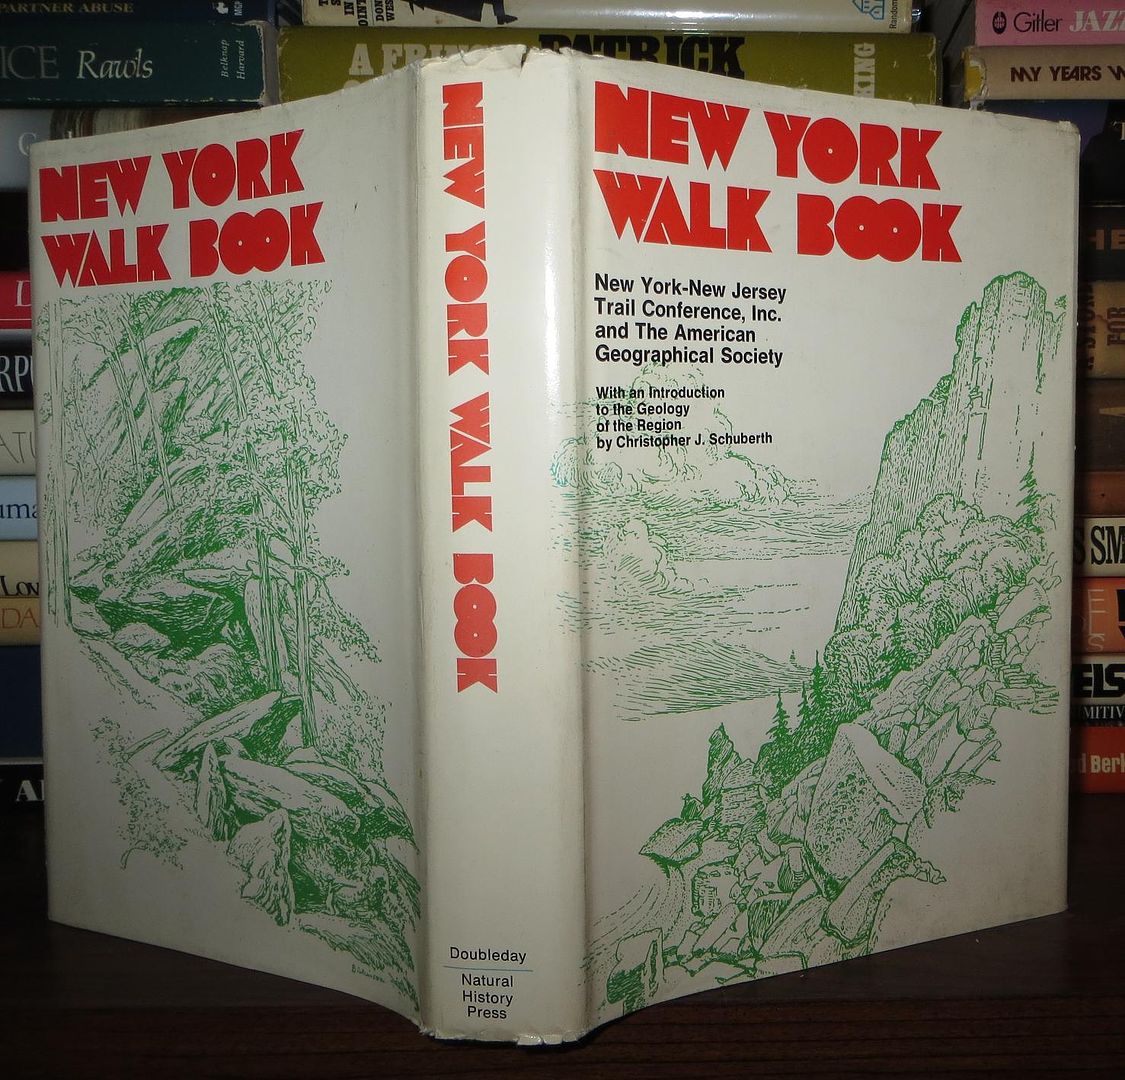 HARRISON, RICHARD EDES & ROBERT L. DICKINSON - AMERICAN GEOGRAPHICAL SOCIETY - New York Walk Book